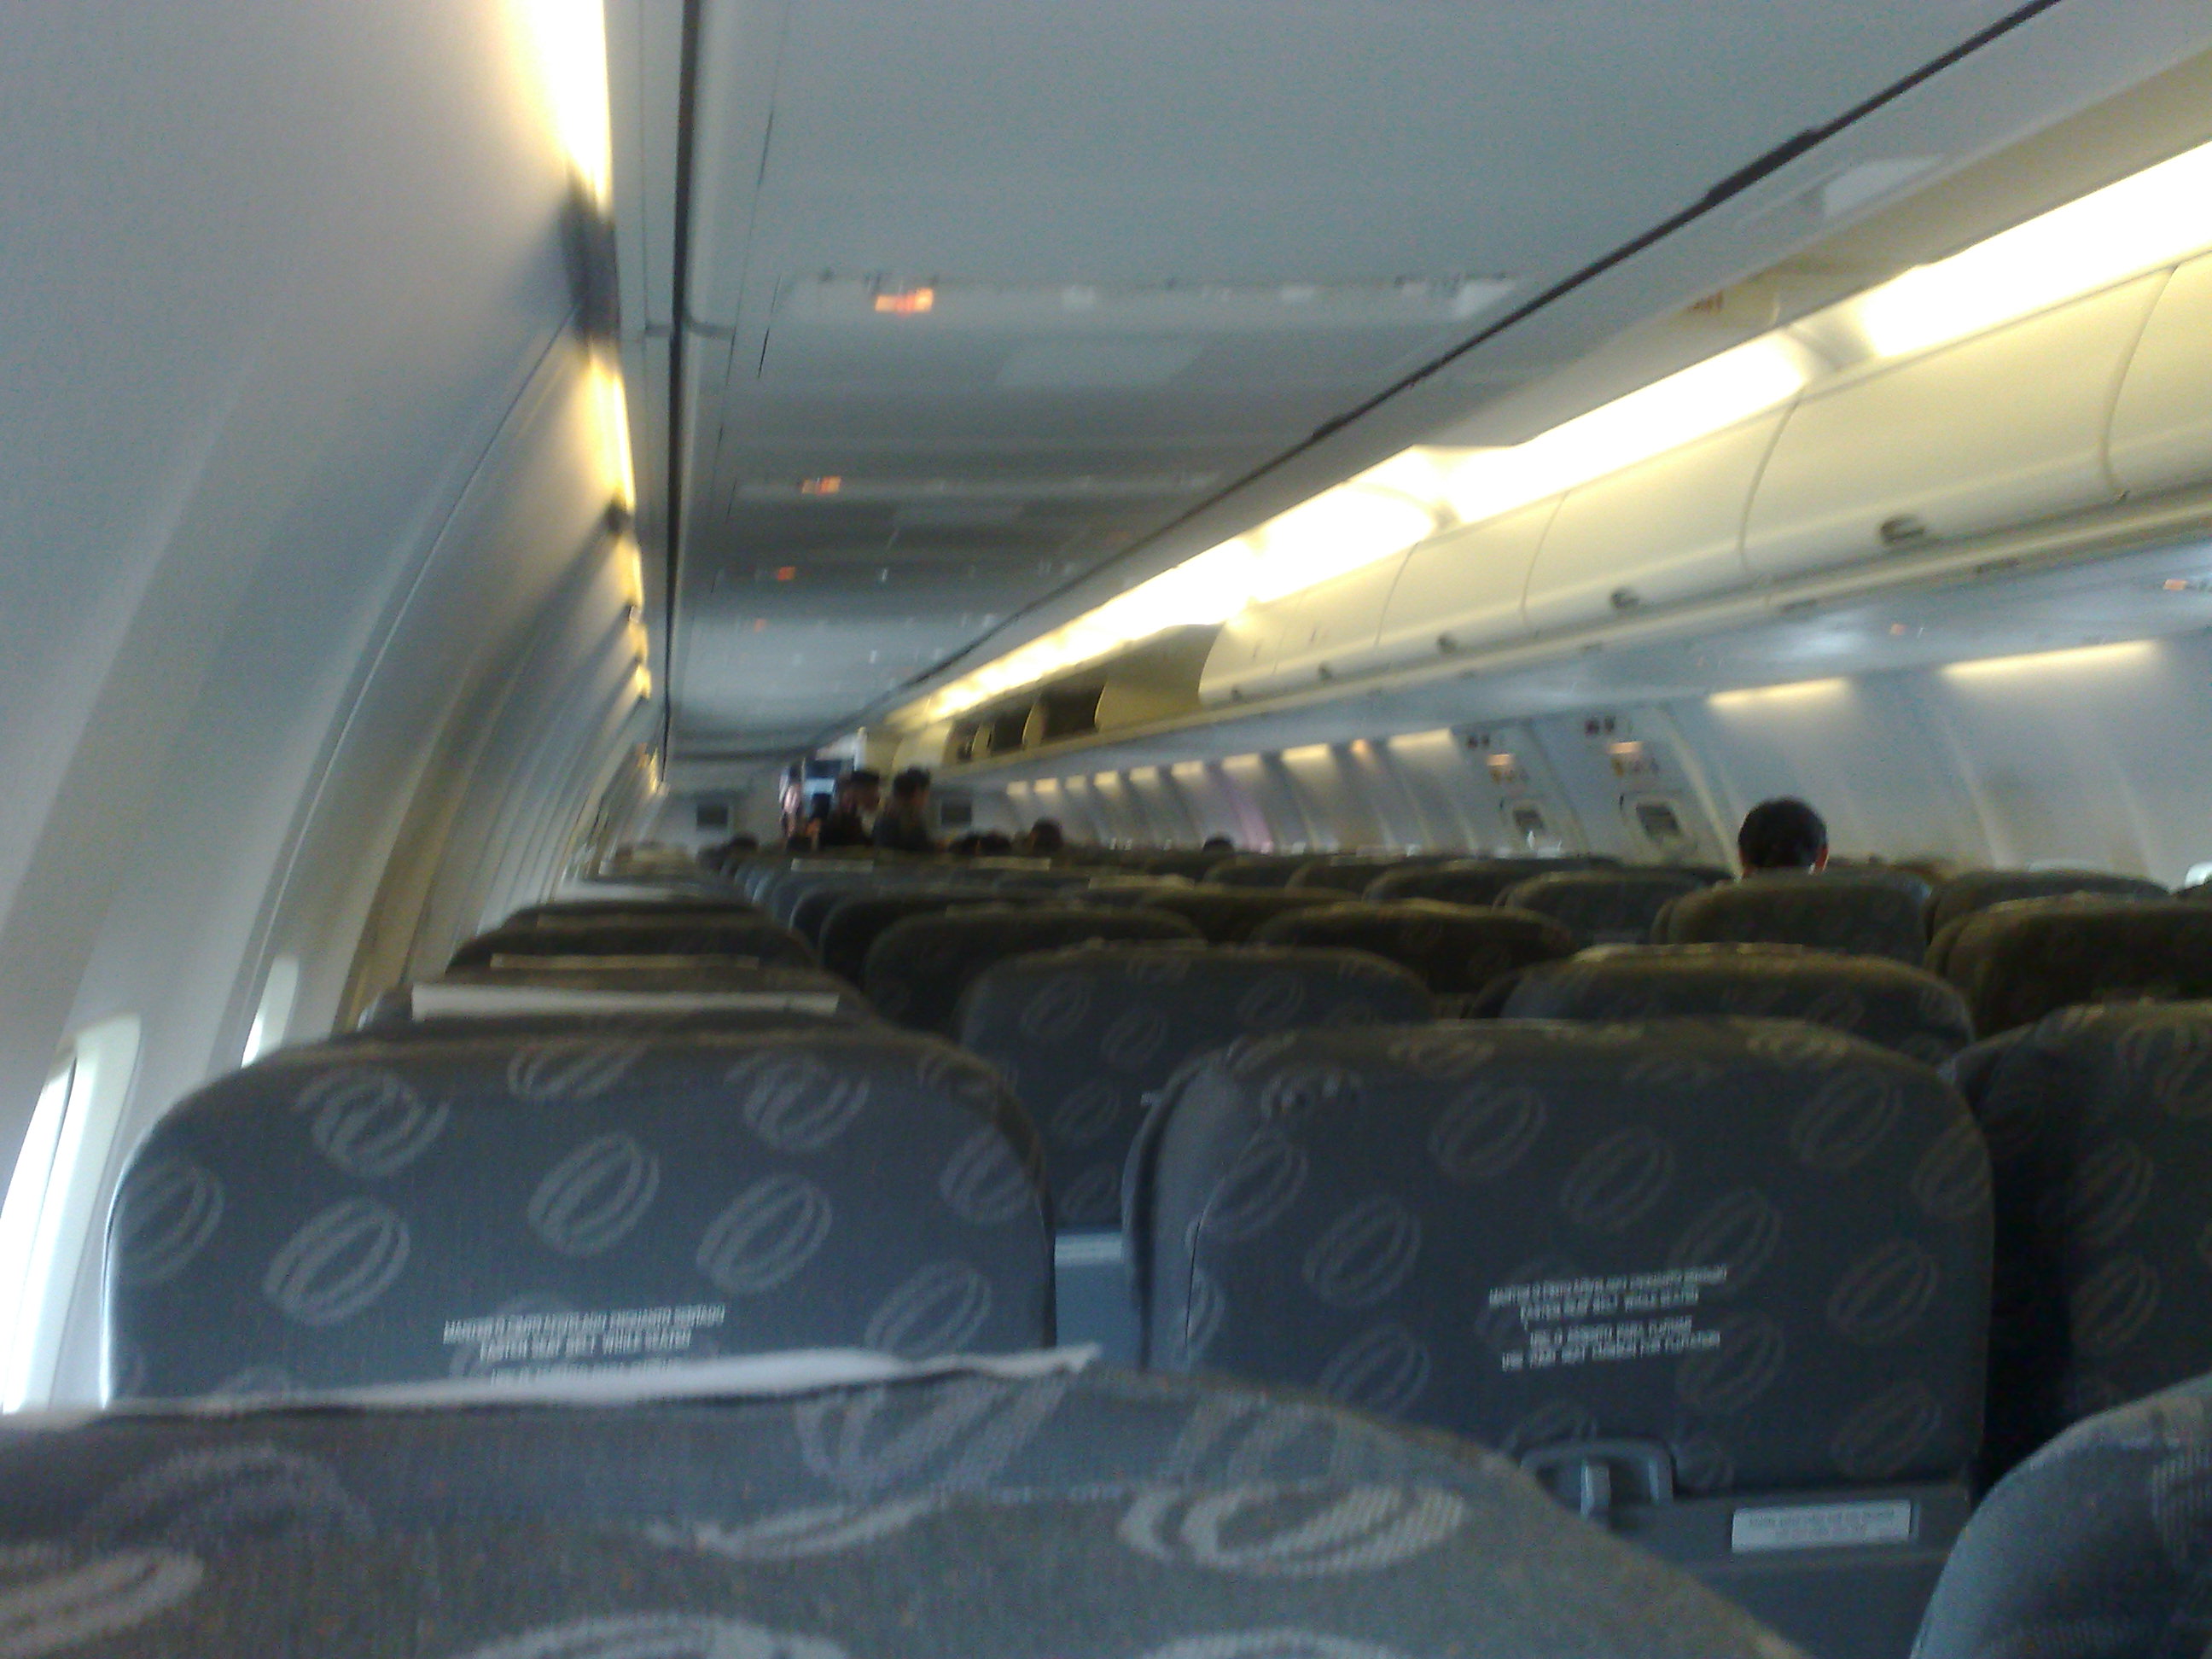 Inside Gol’s Airbus A319, to São Paulo